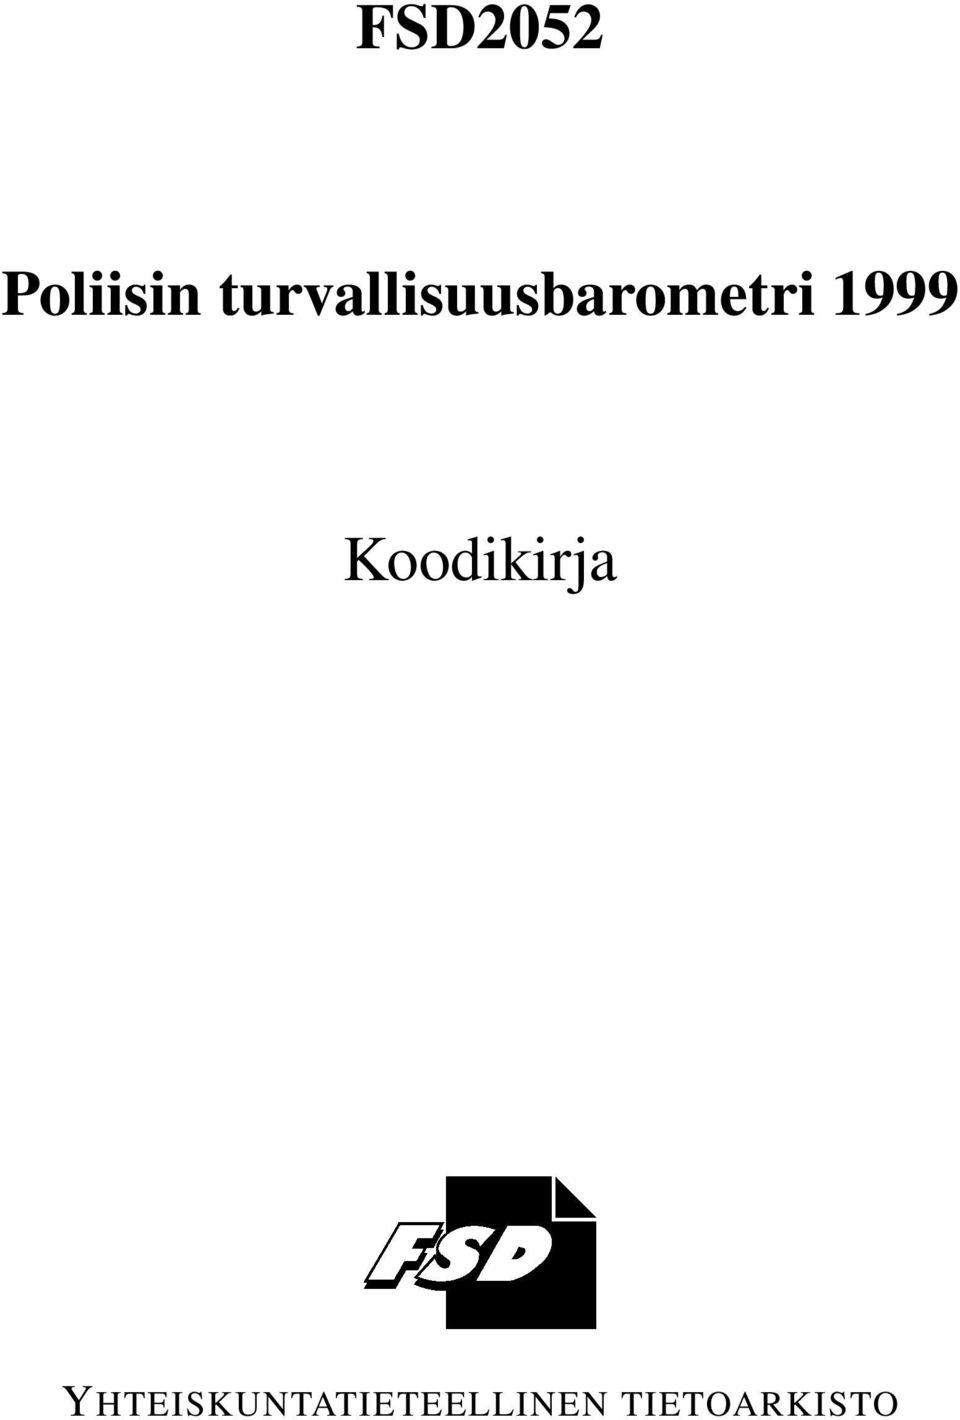 1999 Koodikirja